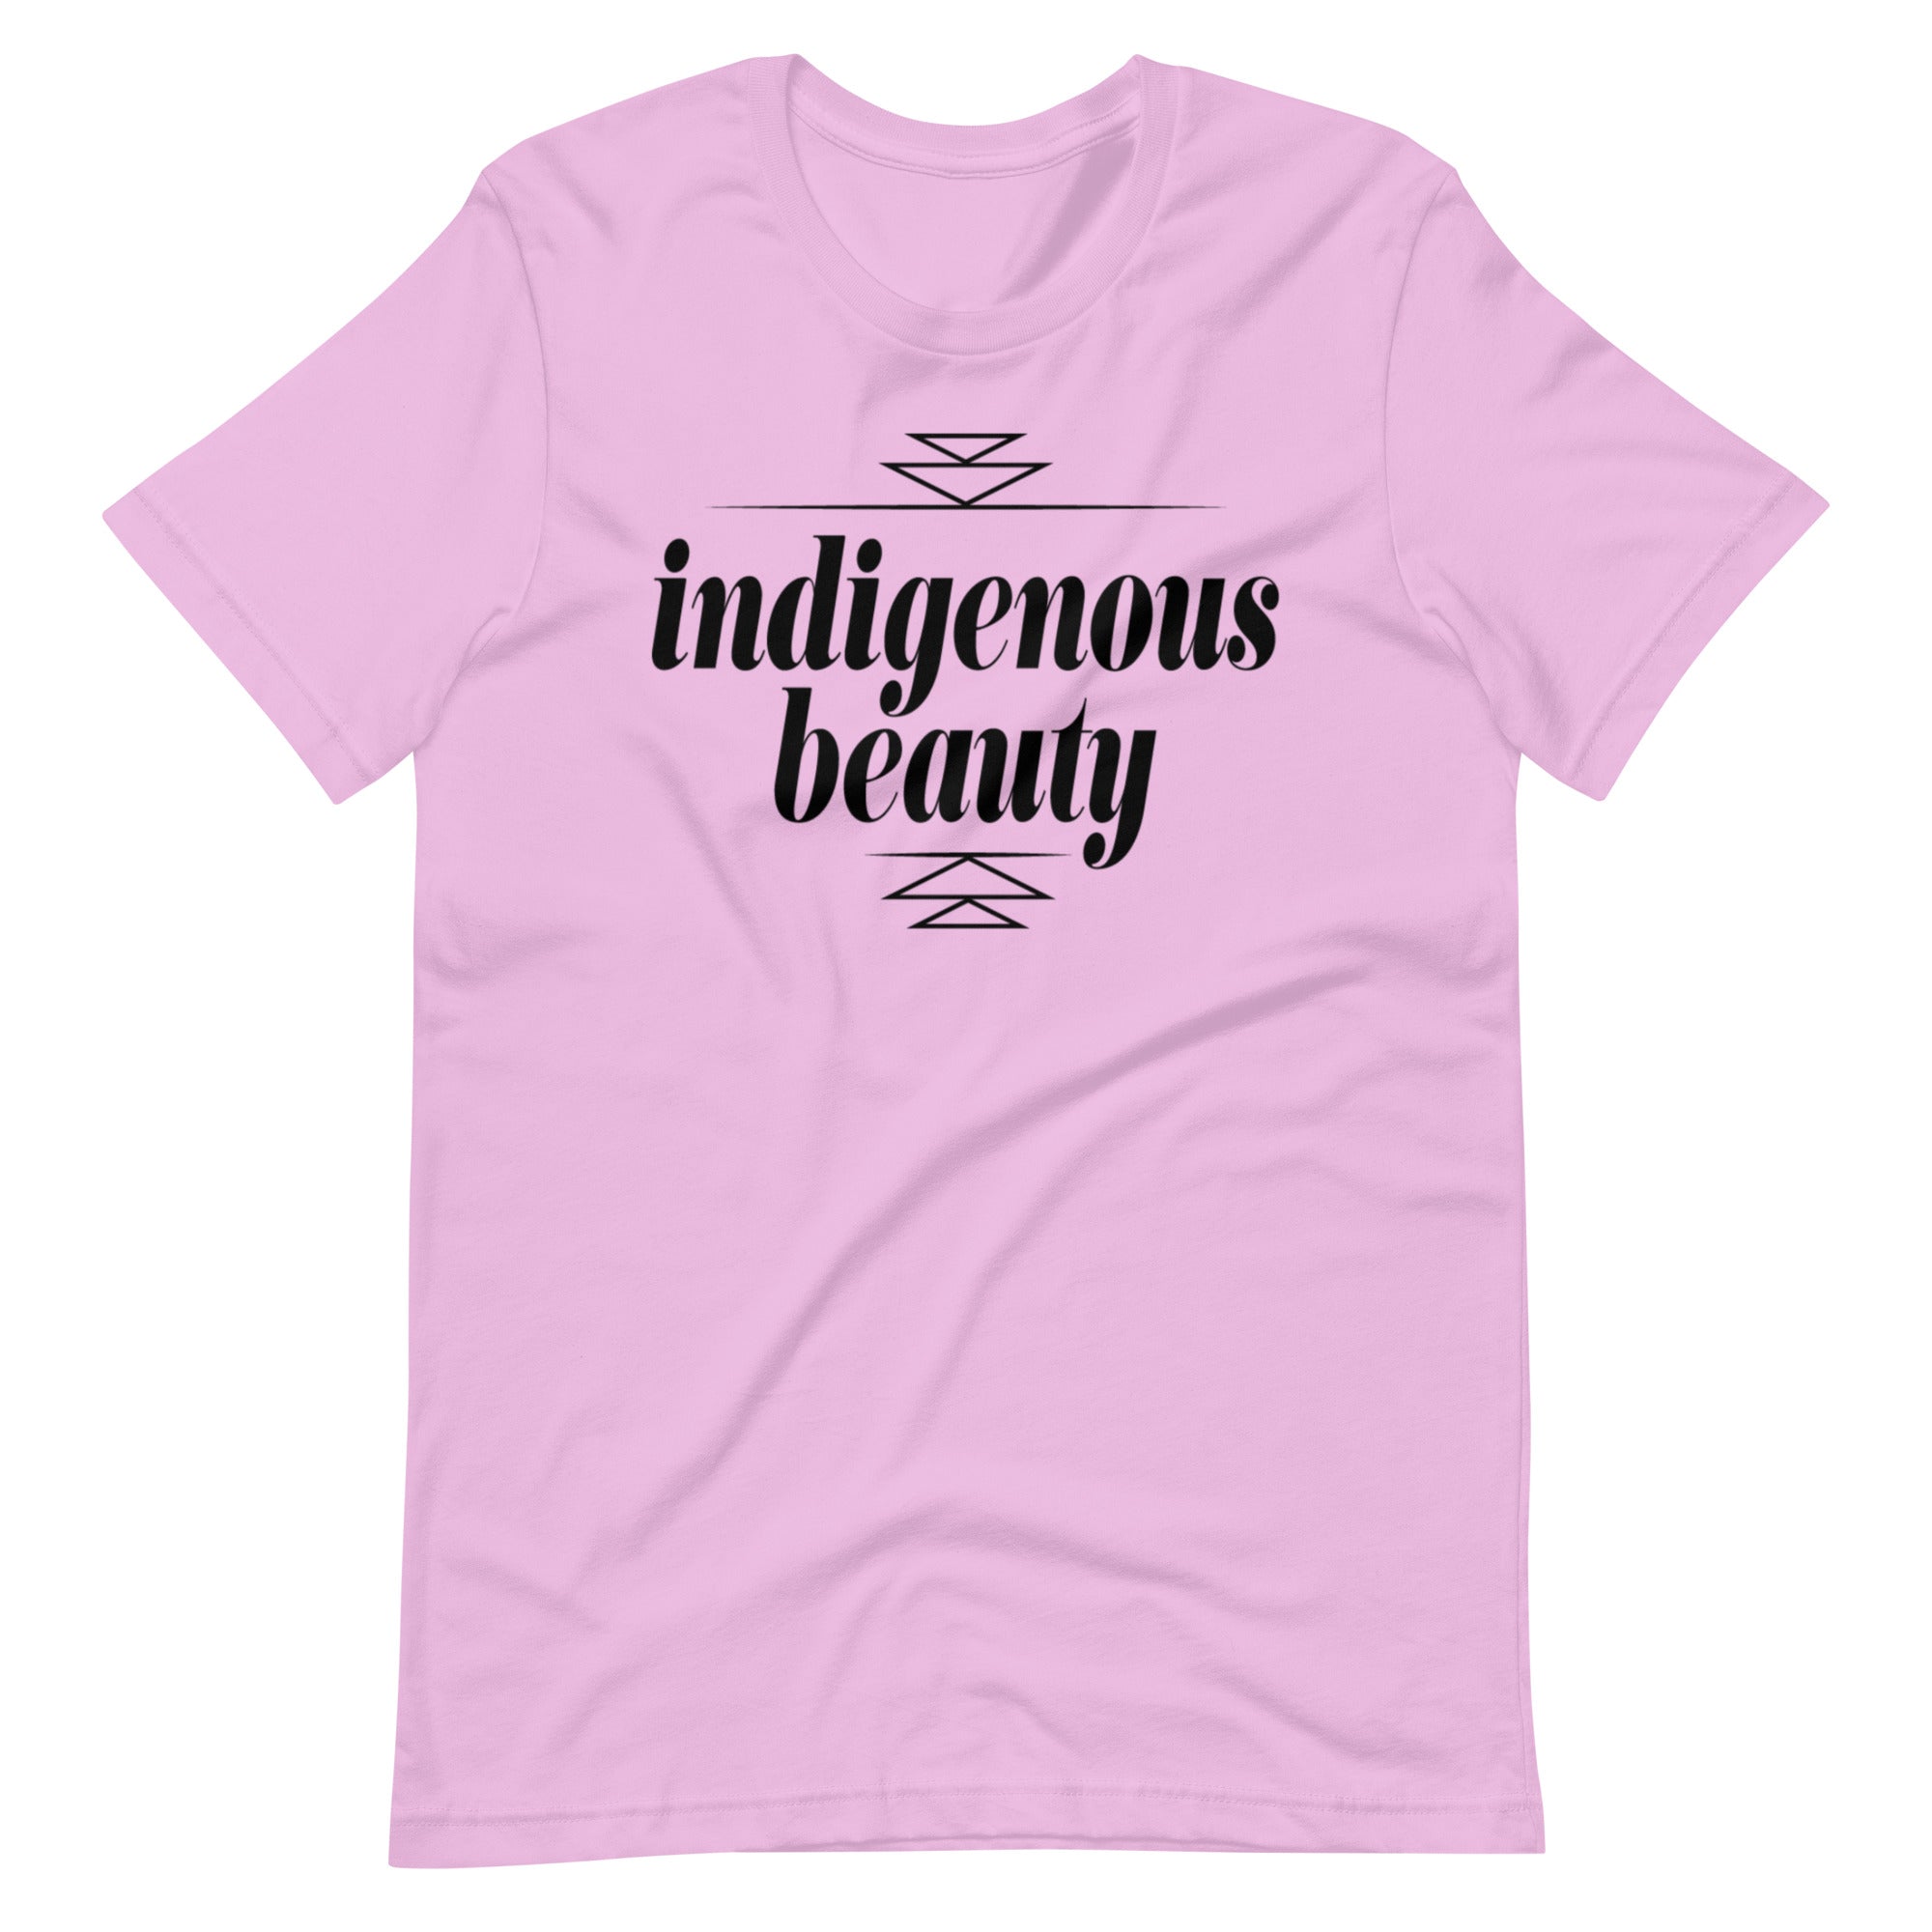 Indigenous Beauty t-shirt